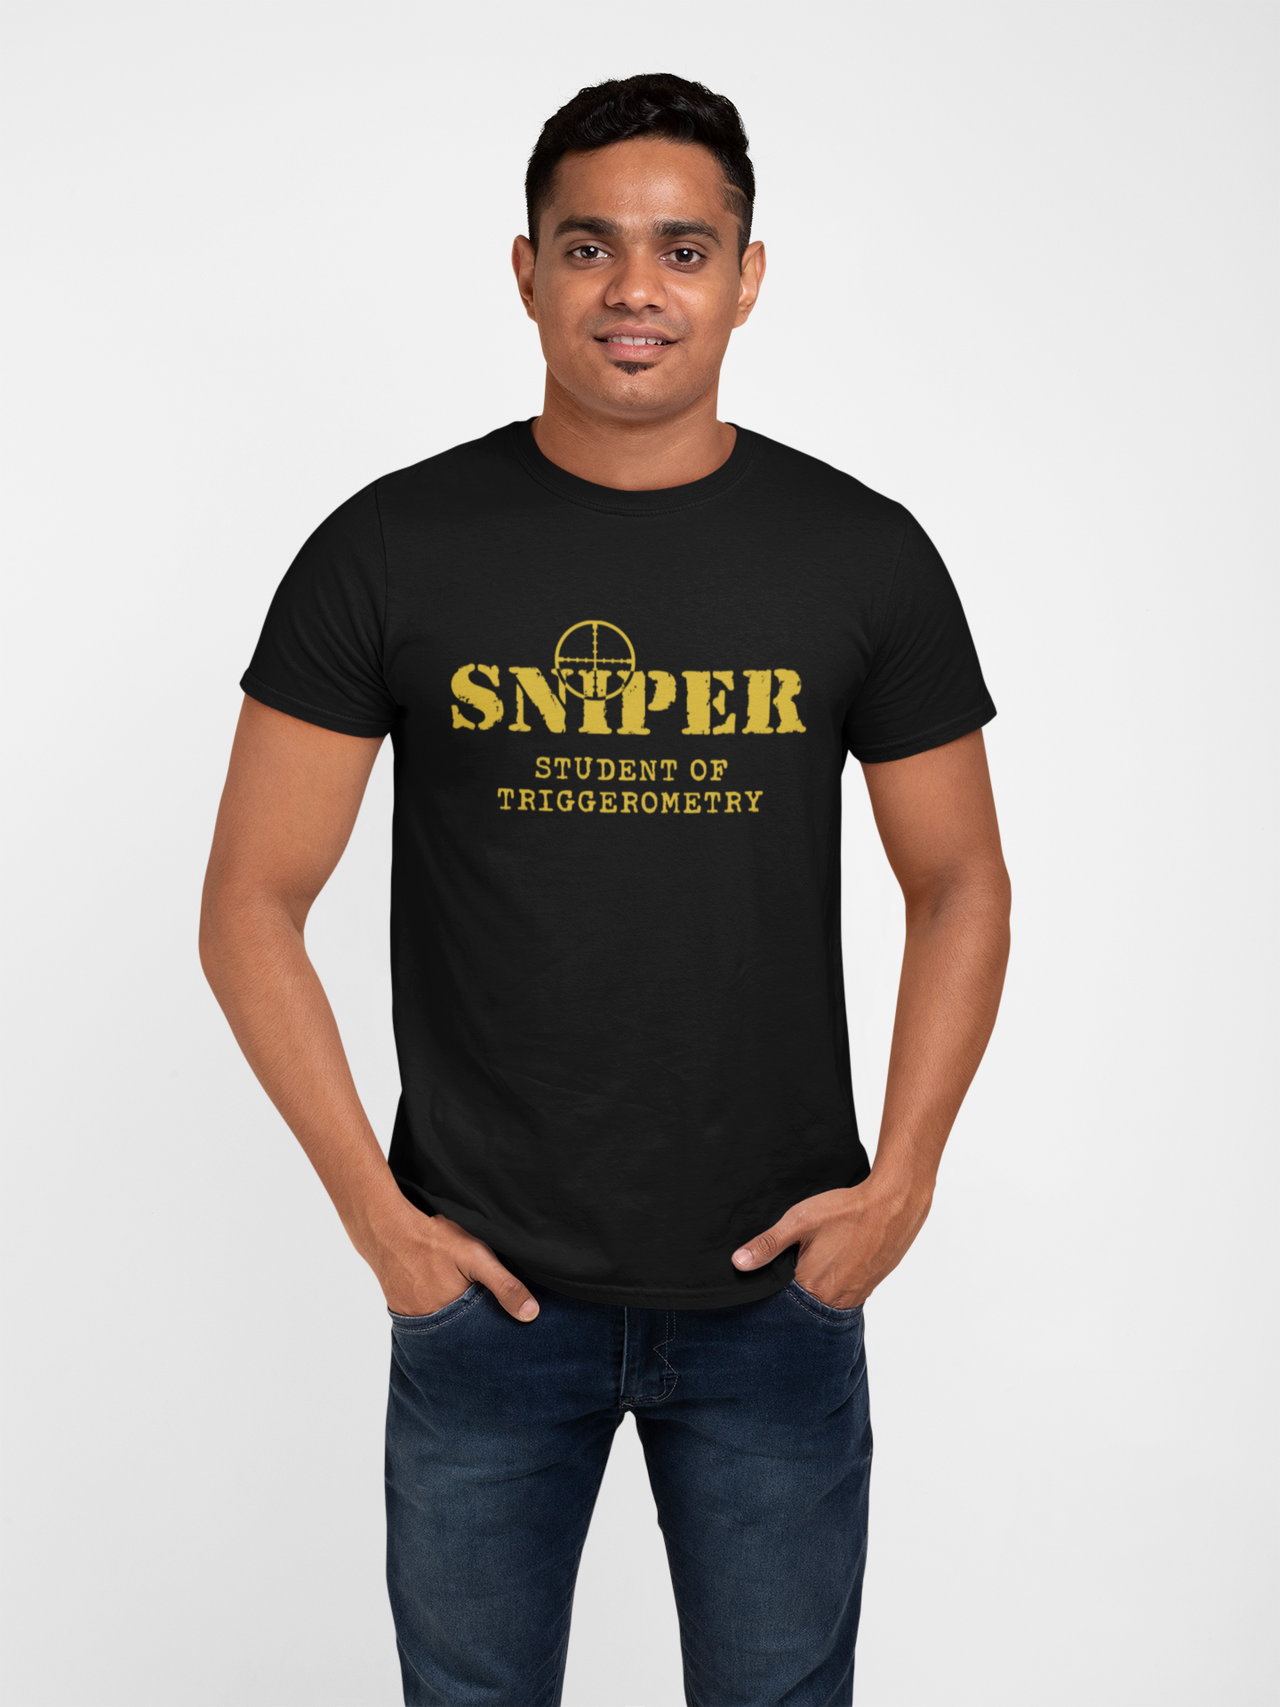 Sniper T-shirt - Sniper, Student of Triggerometry (Men)